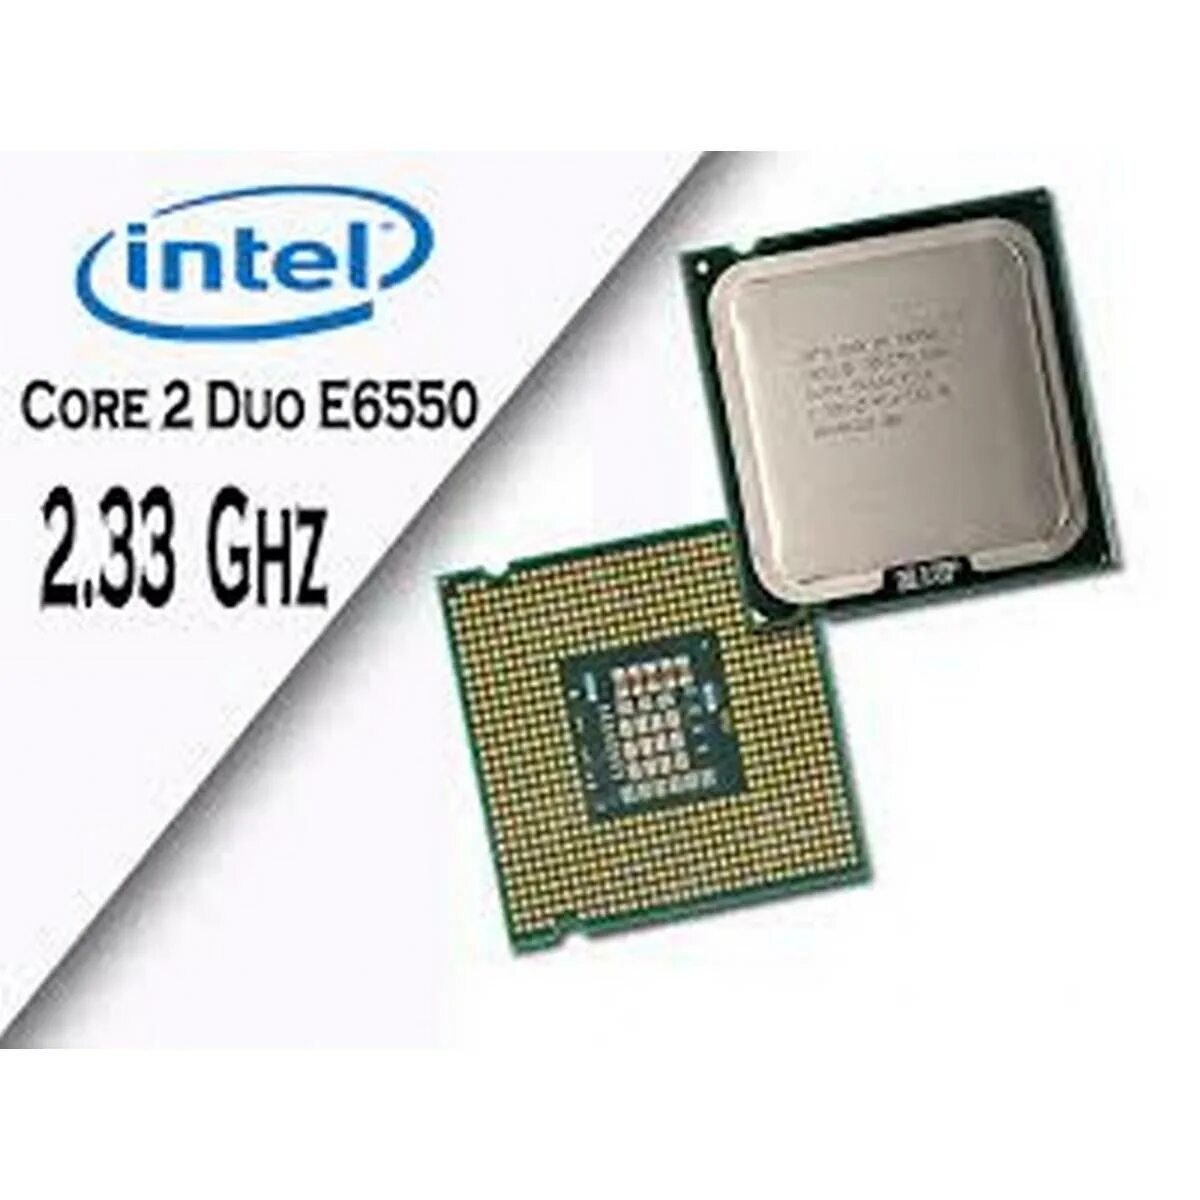 Intel core 2 duo память. Процессор Intel Core 2 Duo. Процессор Intel Core 2 Duo e6550. Intel Core 2 Duo e6550 Conroe lga775, 2 x 2333 МГЦ. Intel Core ТМ 2 е6550.